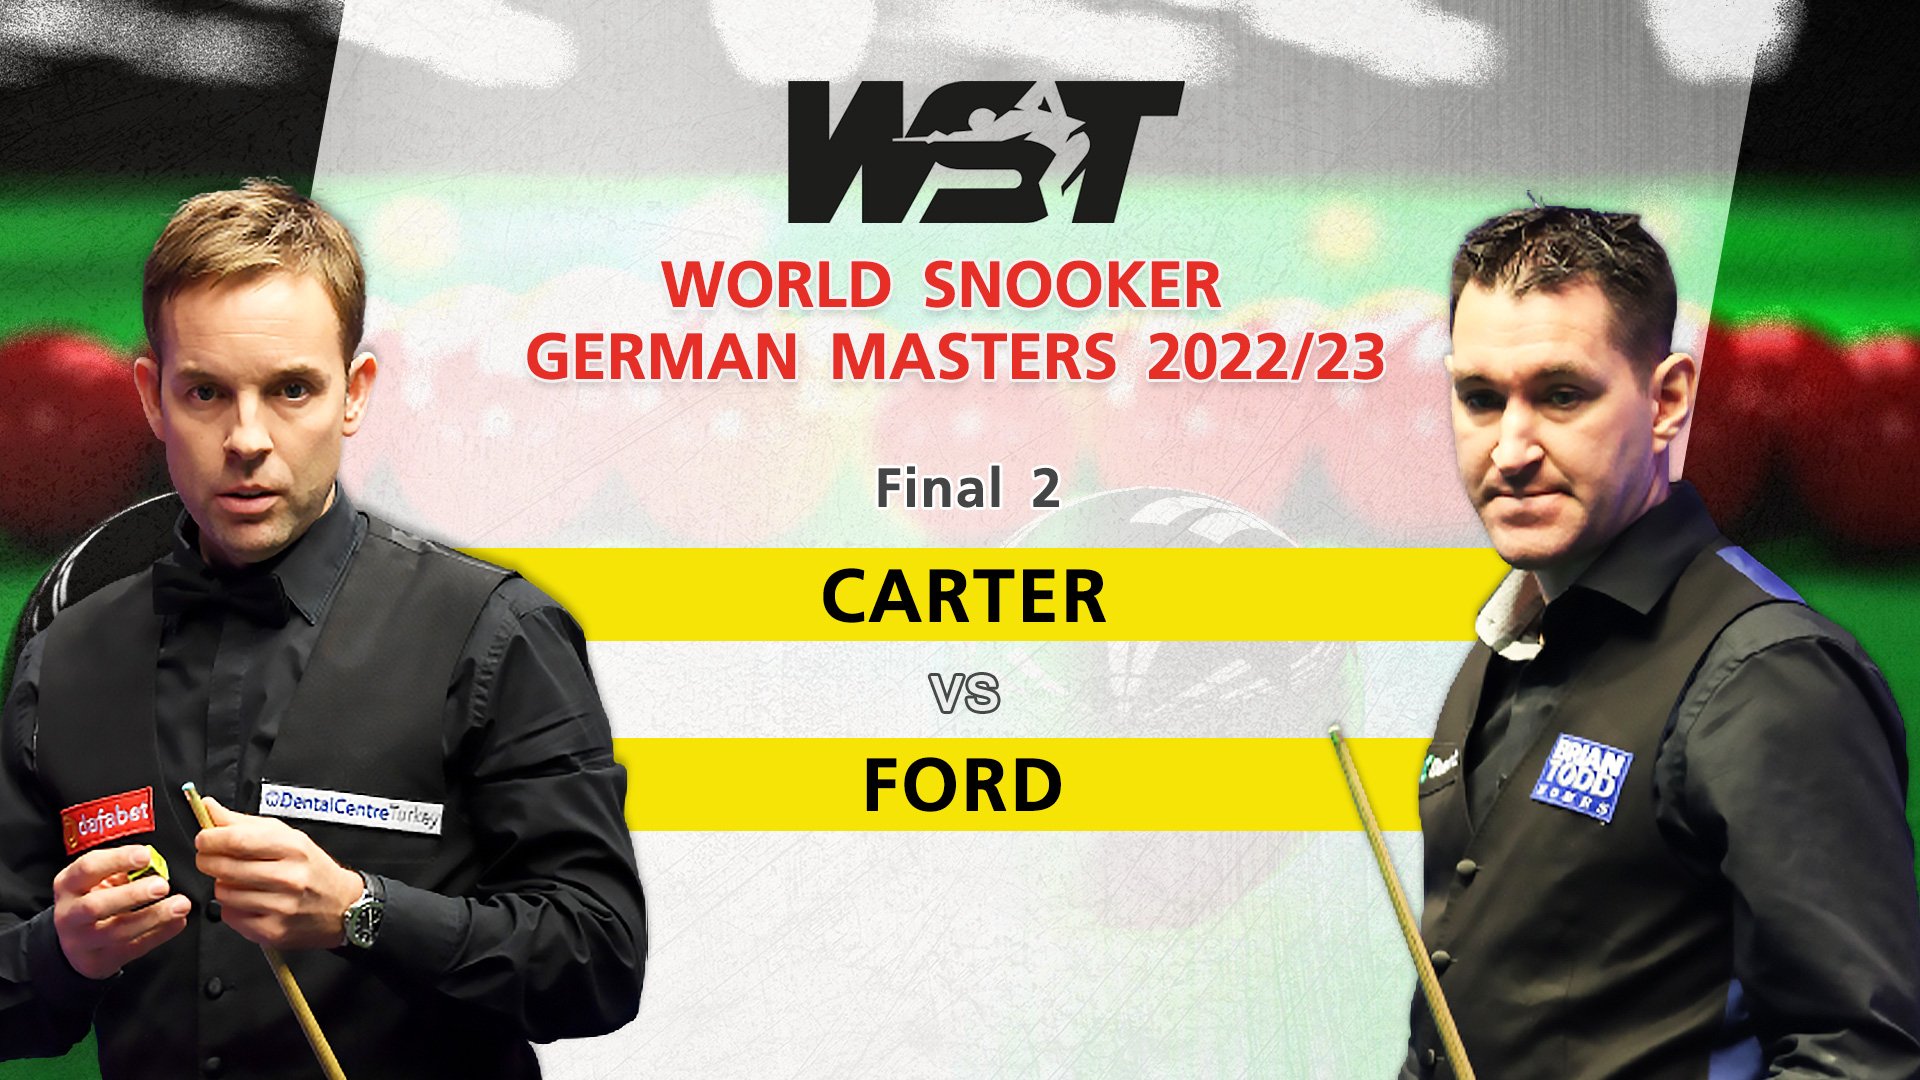 Carter VS Ford Final2 World Snooker German Masters